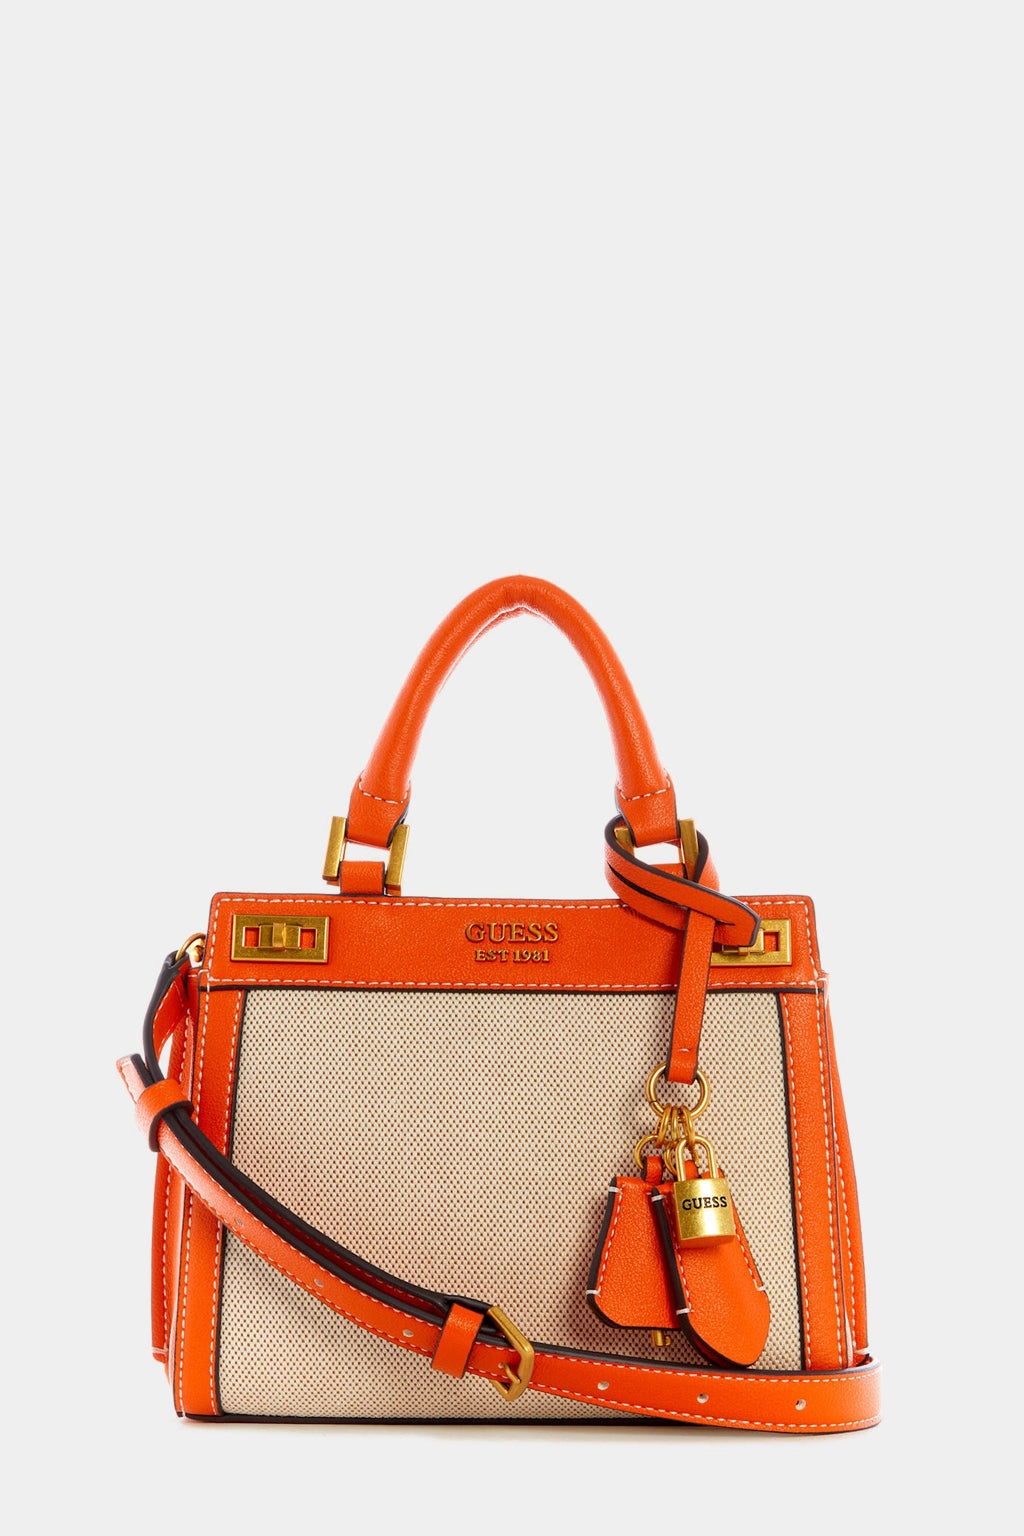 GUESS Katey Canevas Mini satchel Natural/Sage